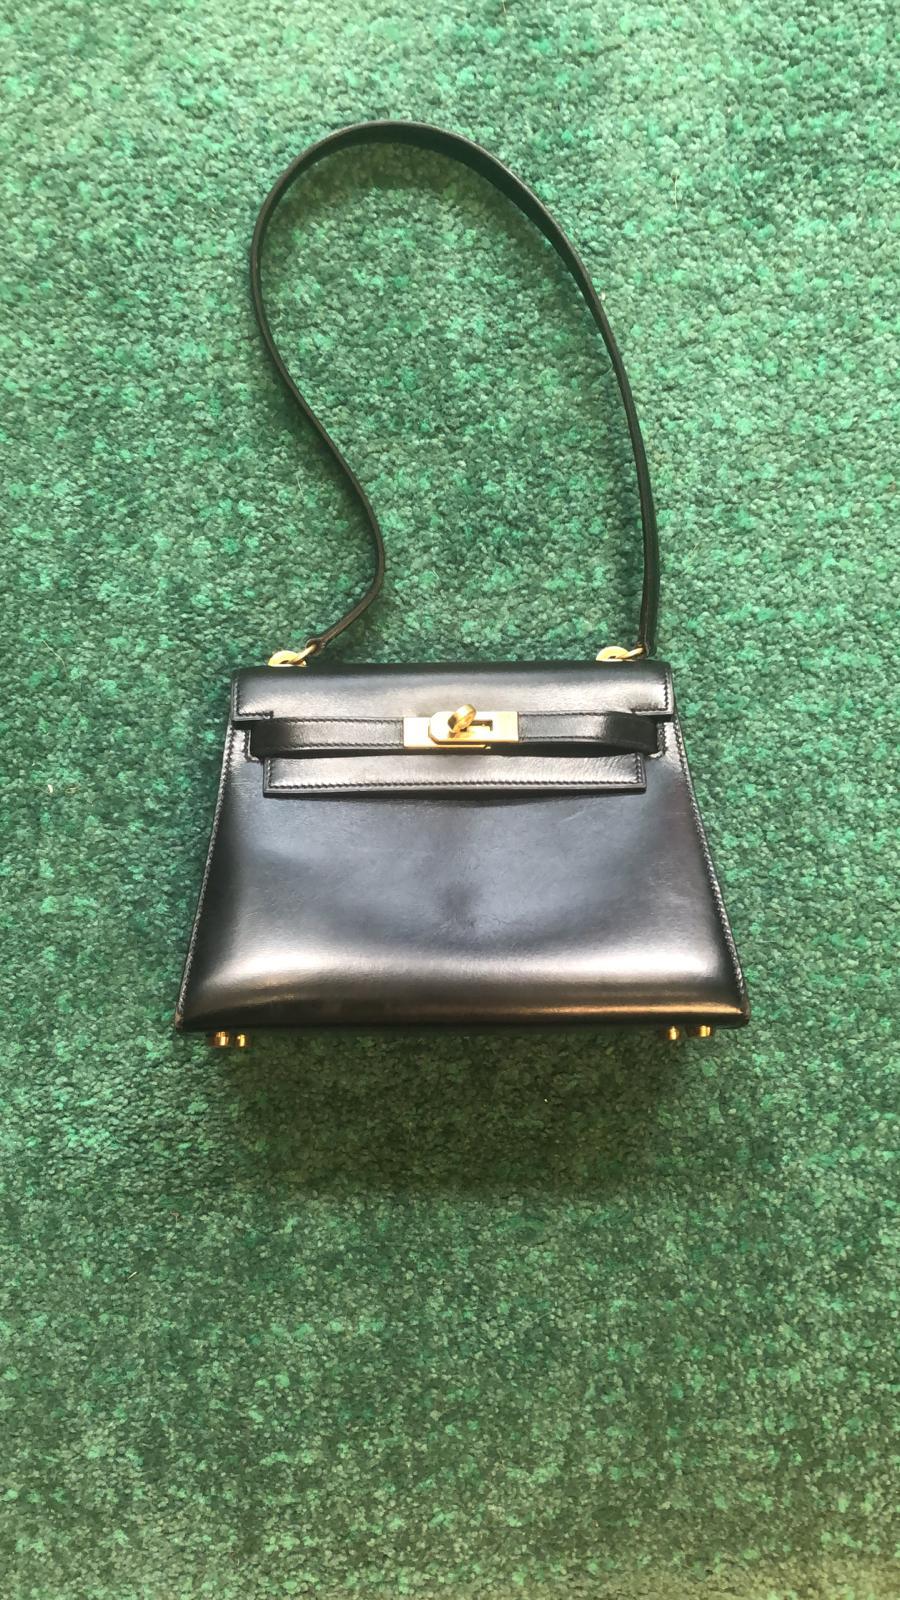 1988 Vintage Hermes Mini Kelly 20 Handbag in Black box leather 3